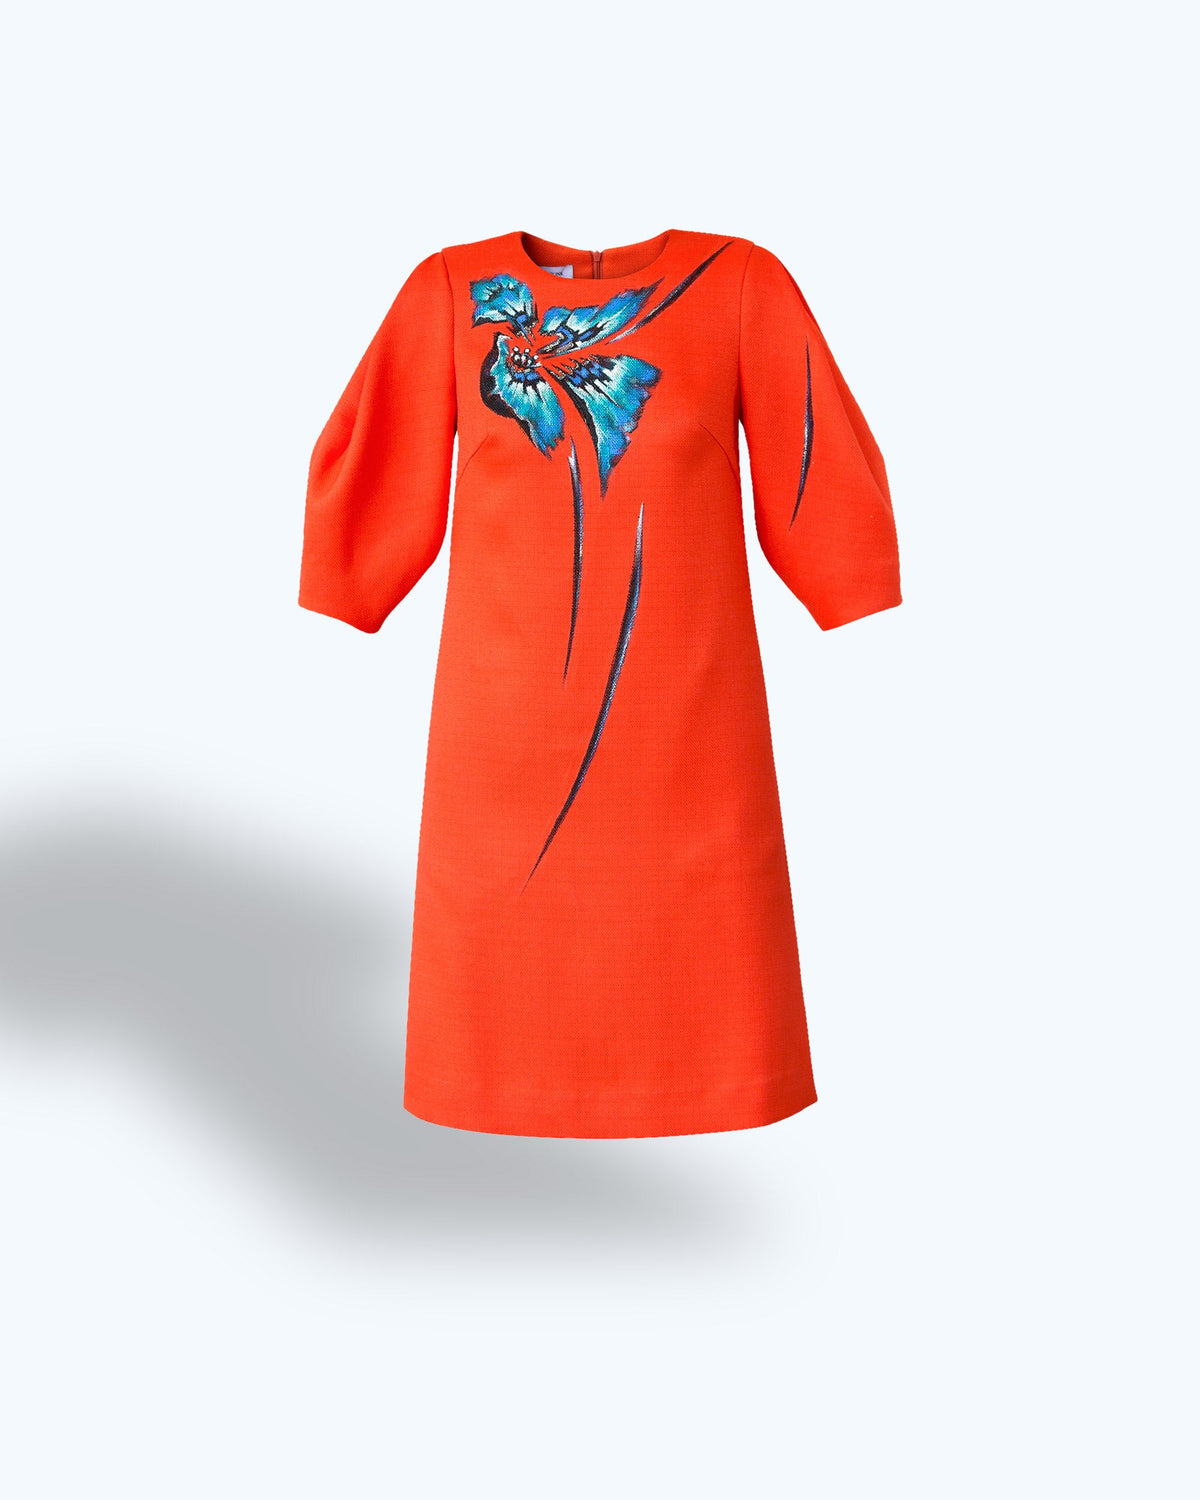 TinyInk-Spring-summer20-orange-hand-painted-poppy-voluminous-sleeve-mini-dress 